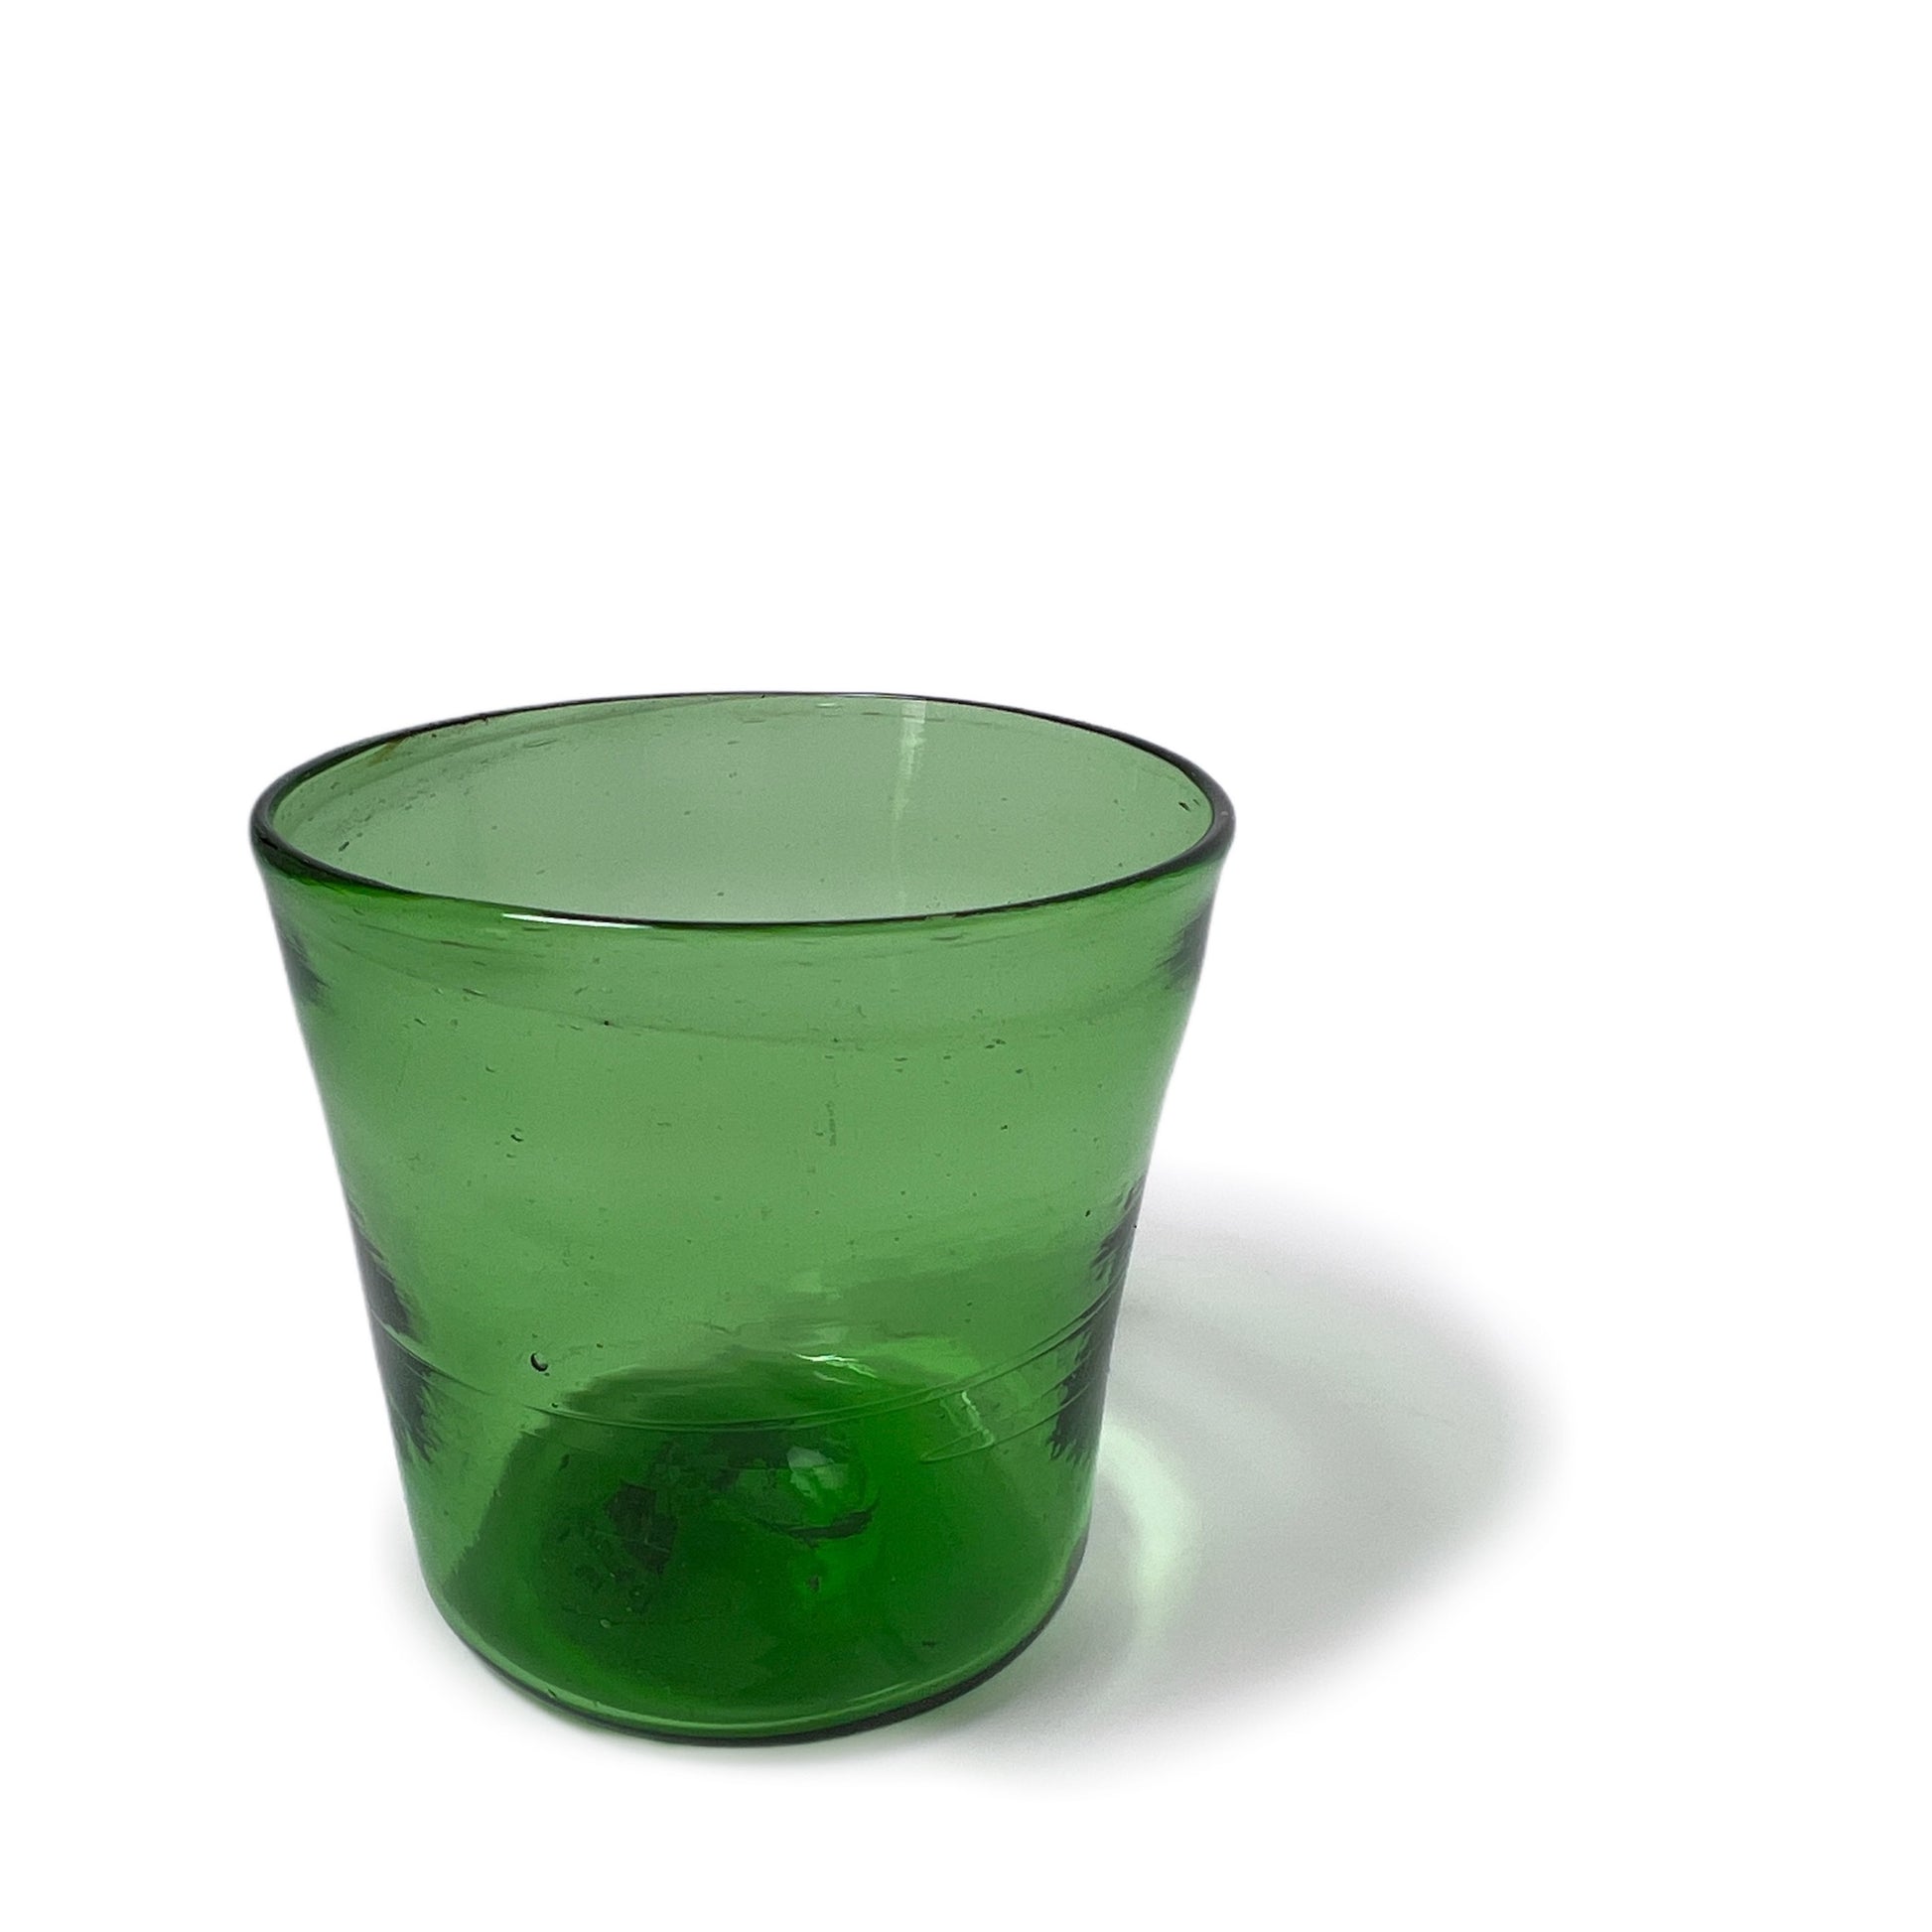 【La Soufflerie】グラス Lyonnais Quinquet Green